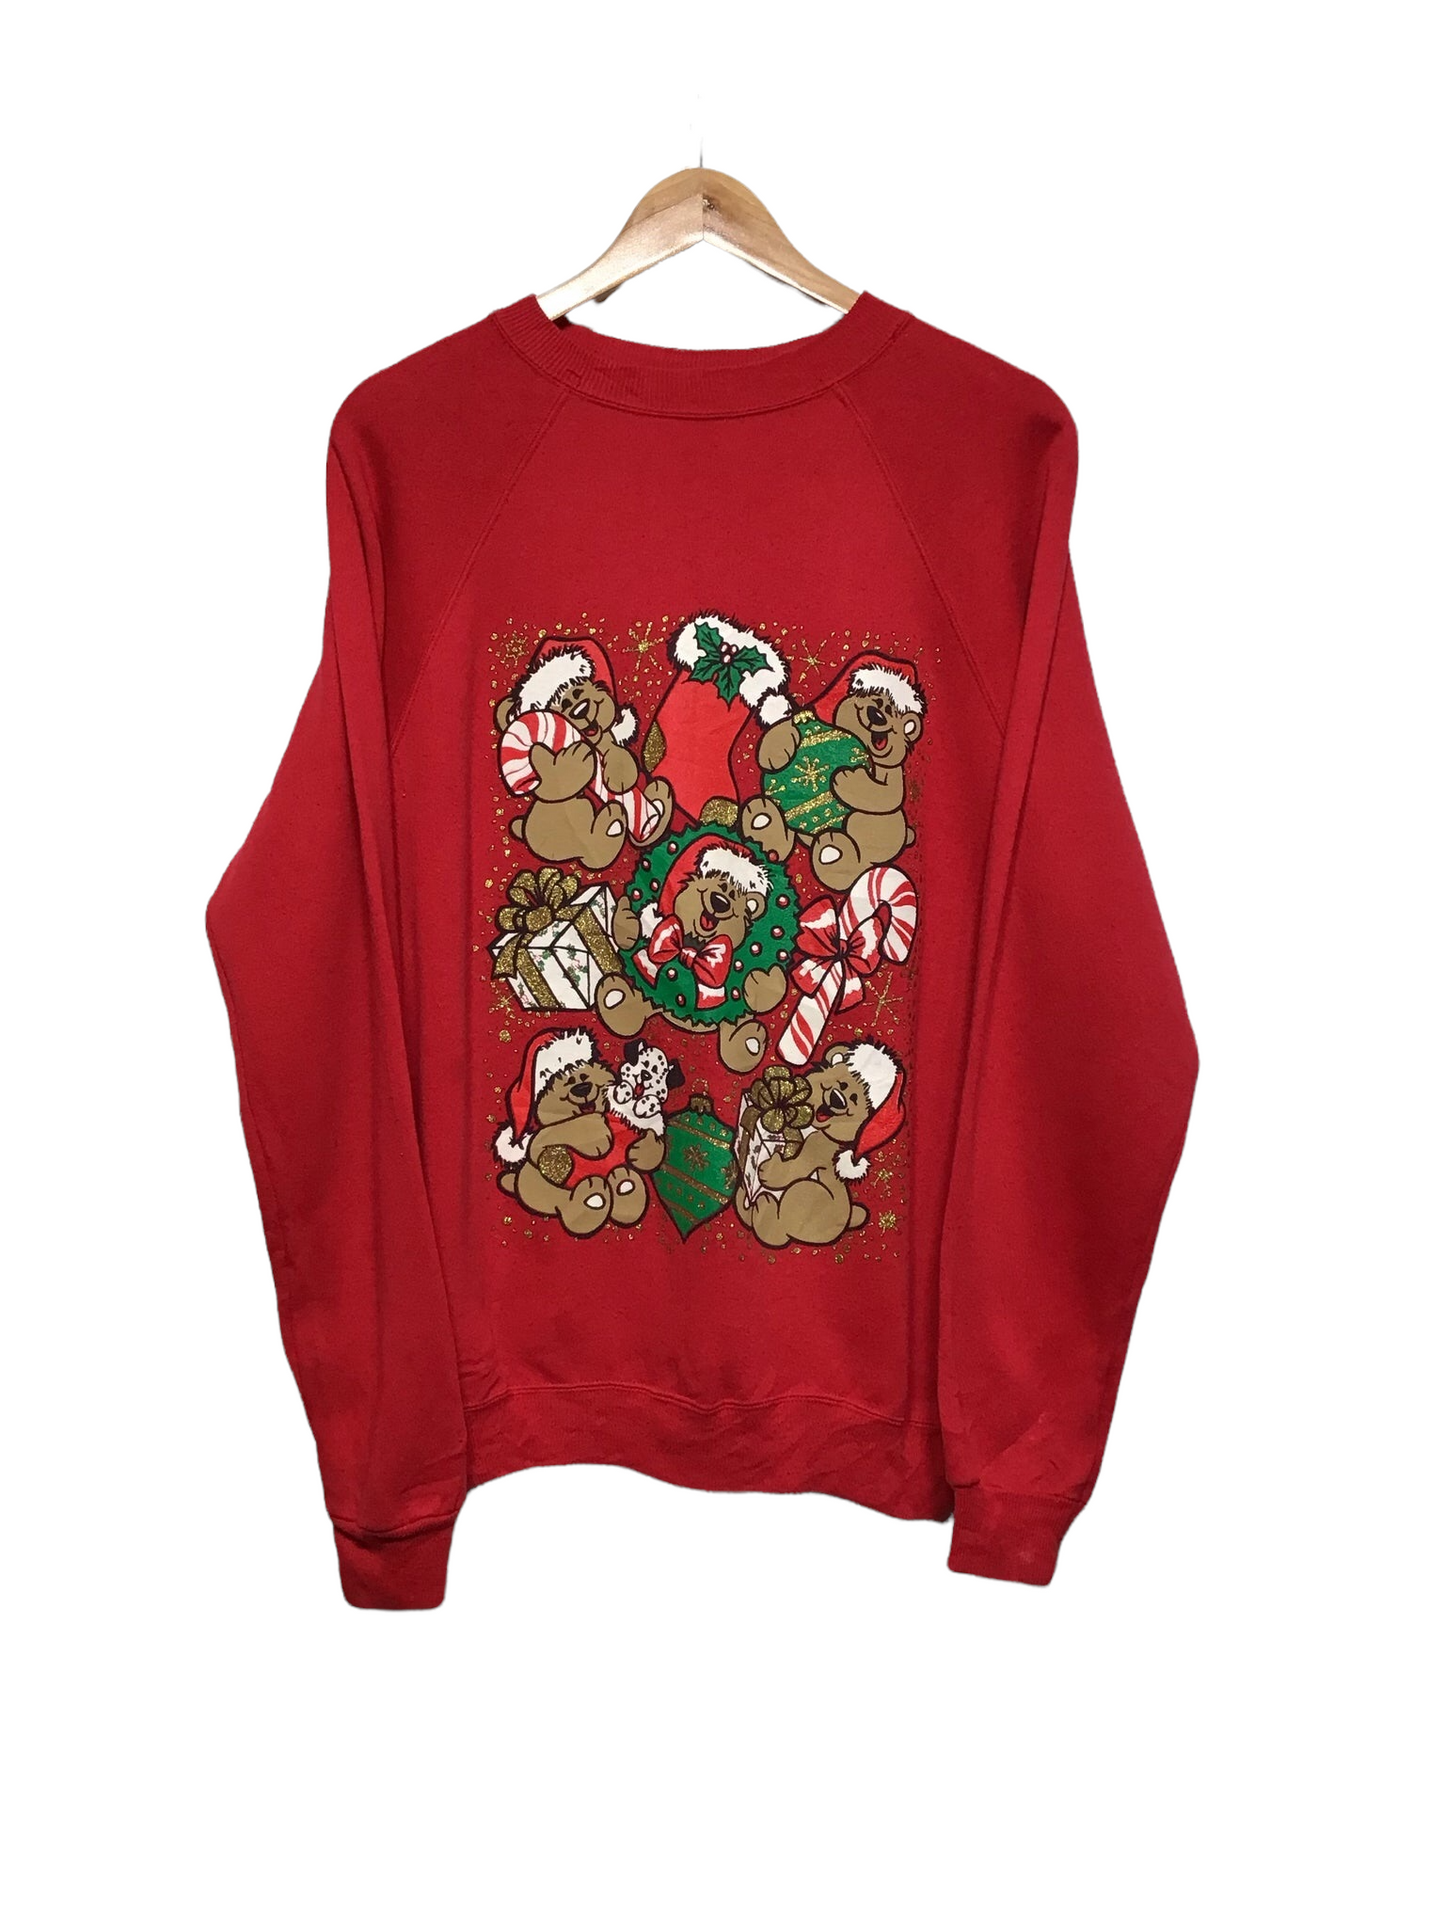 Bears And Candy Christmas Sweatshirt (Size XL)